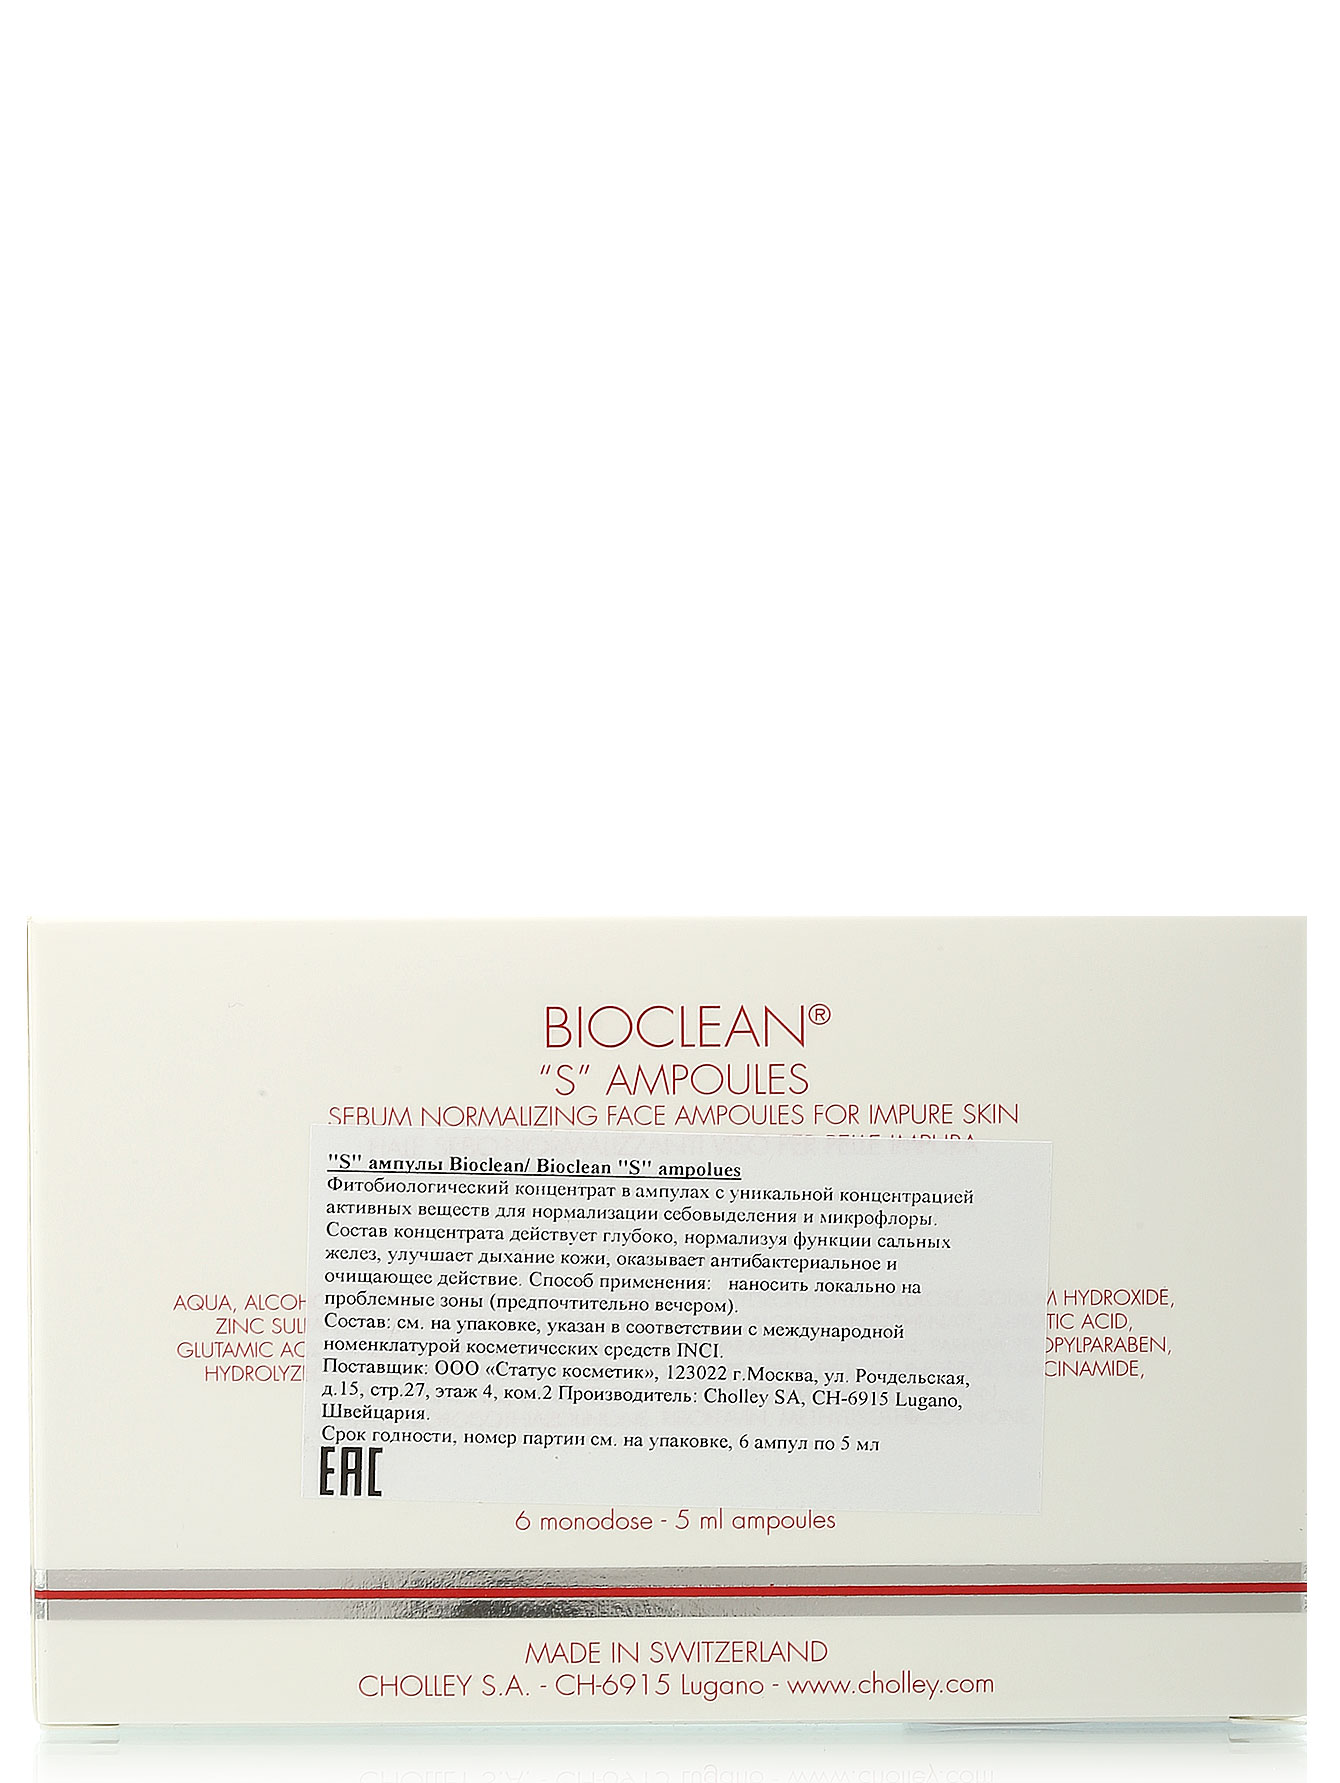 "S" Ампулы Bioclean 1 коробка - Skin Care, 6x5ml - Модель Верх-Низ